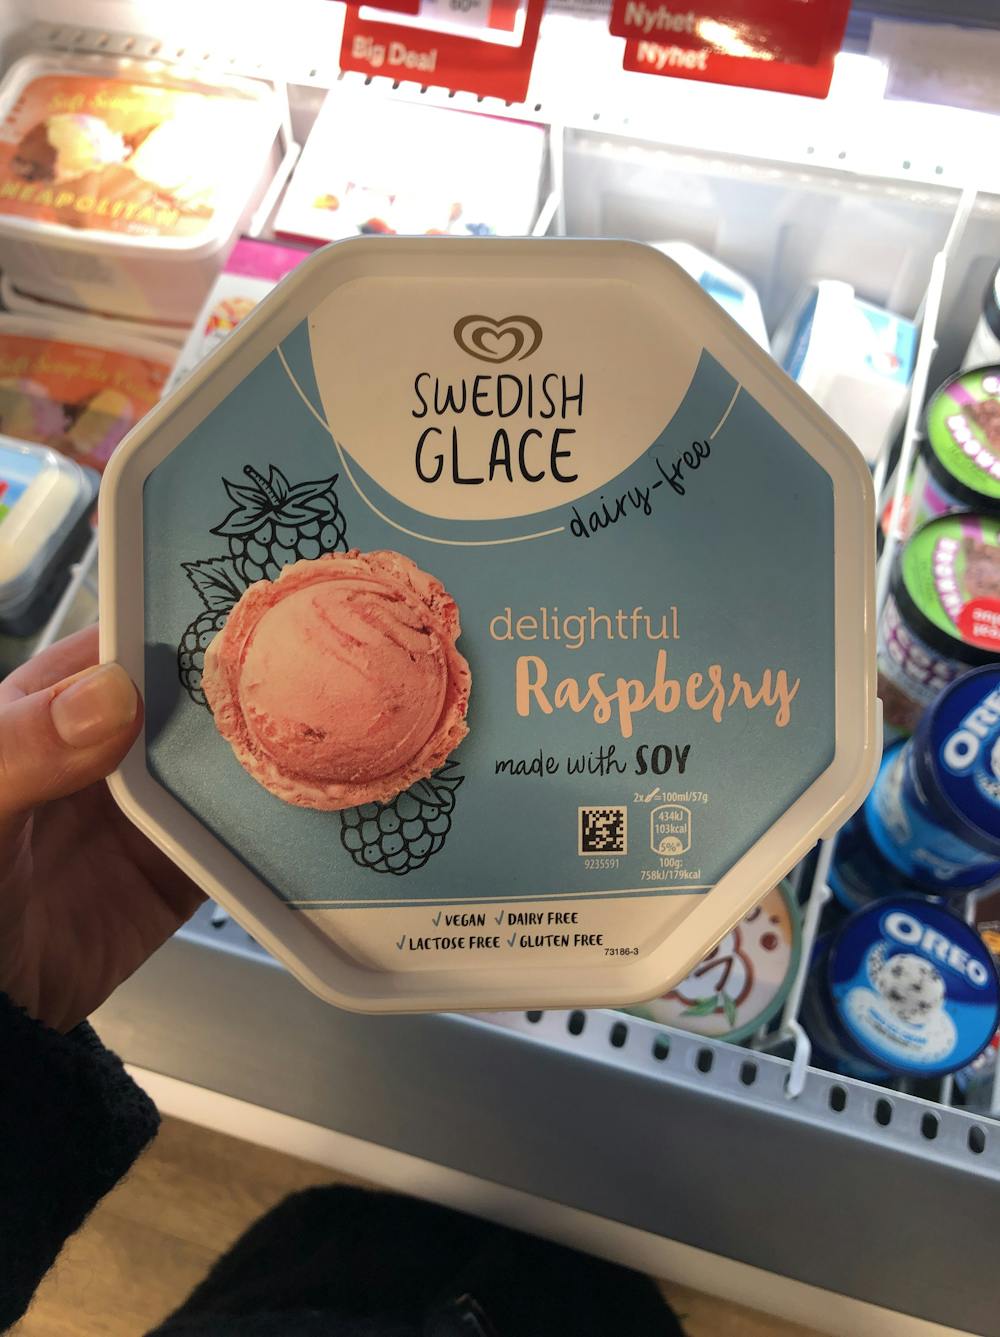 Delightful raspberry, Swedish glace